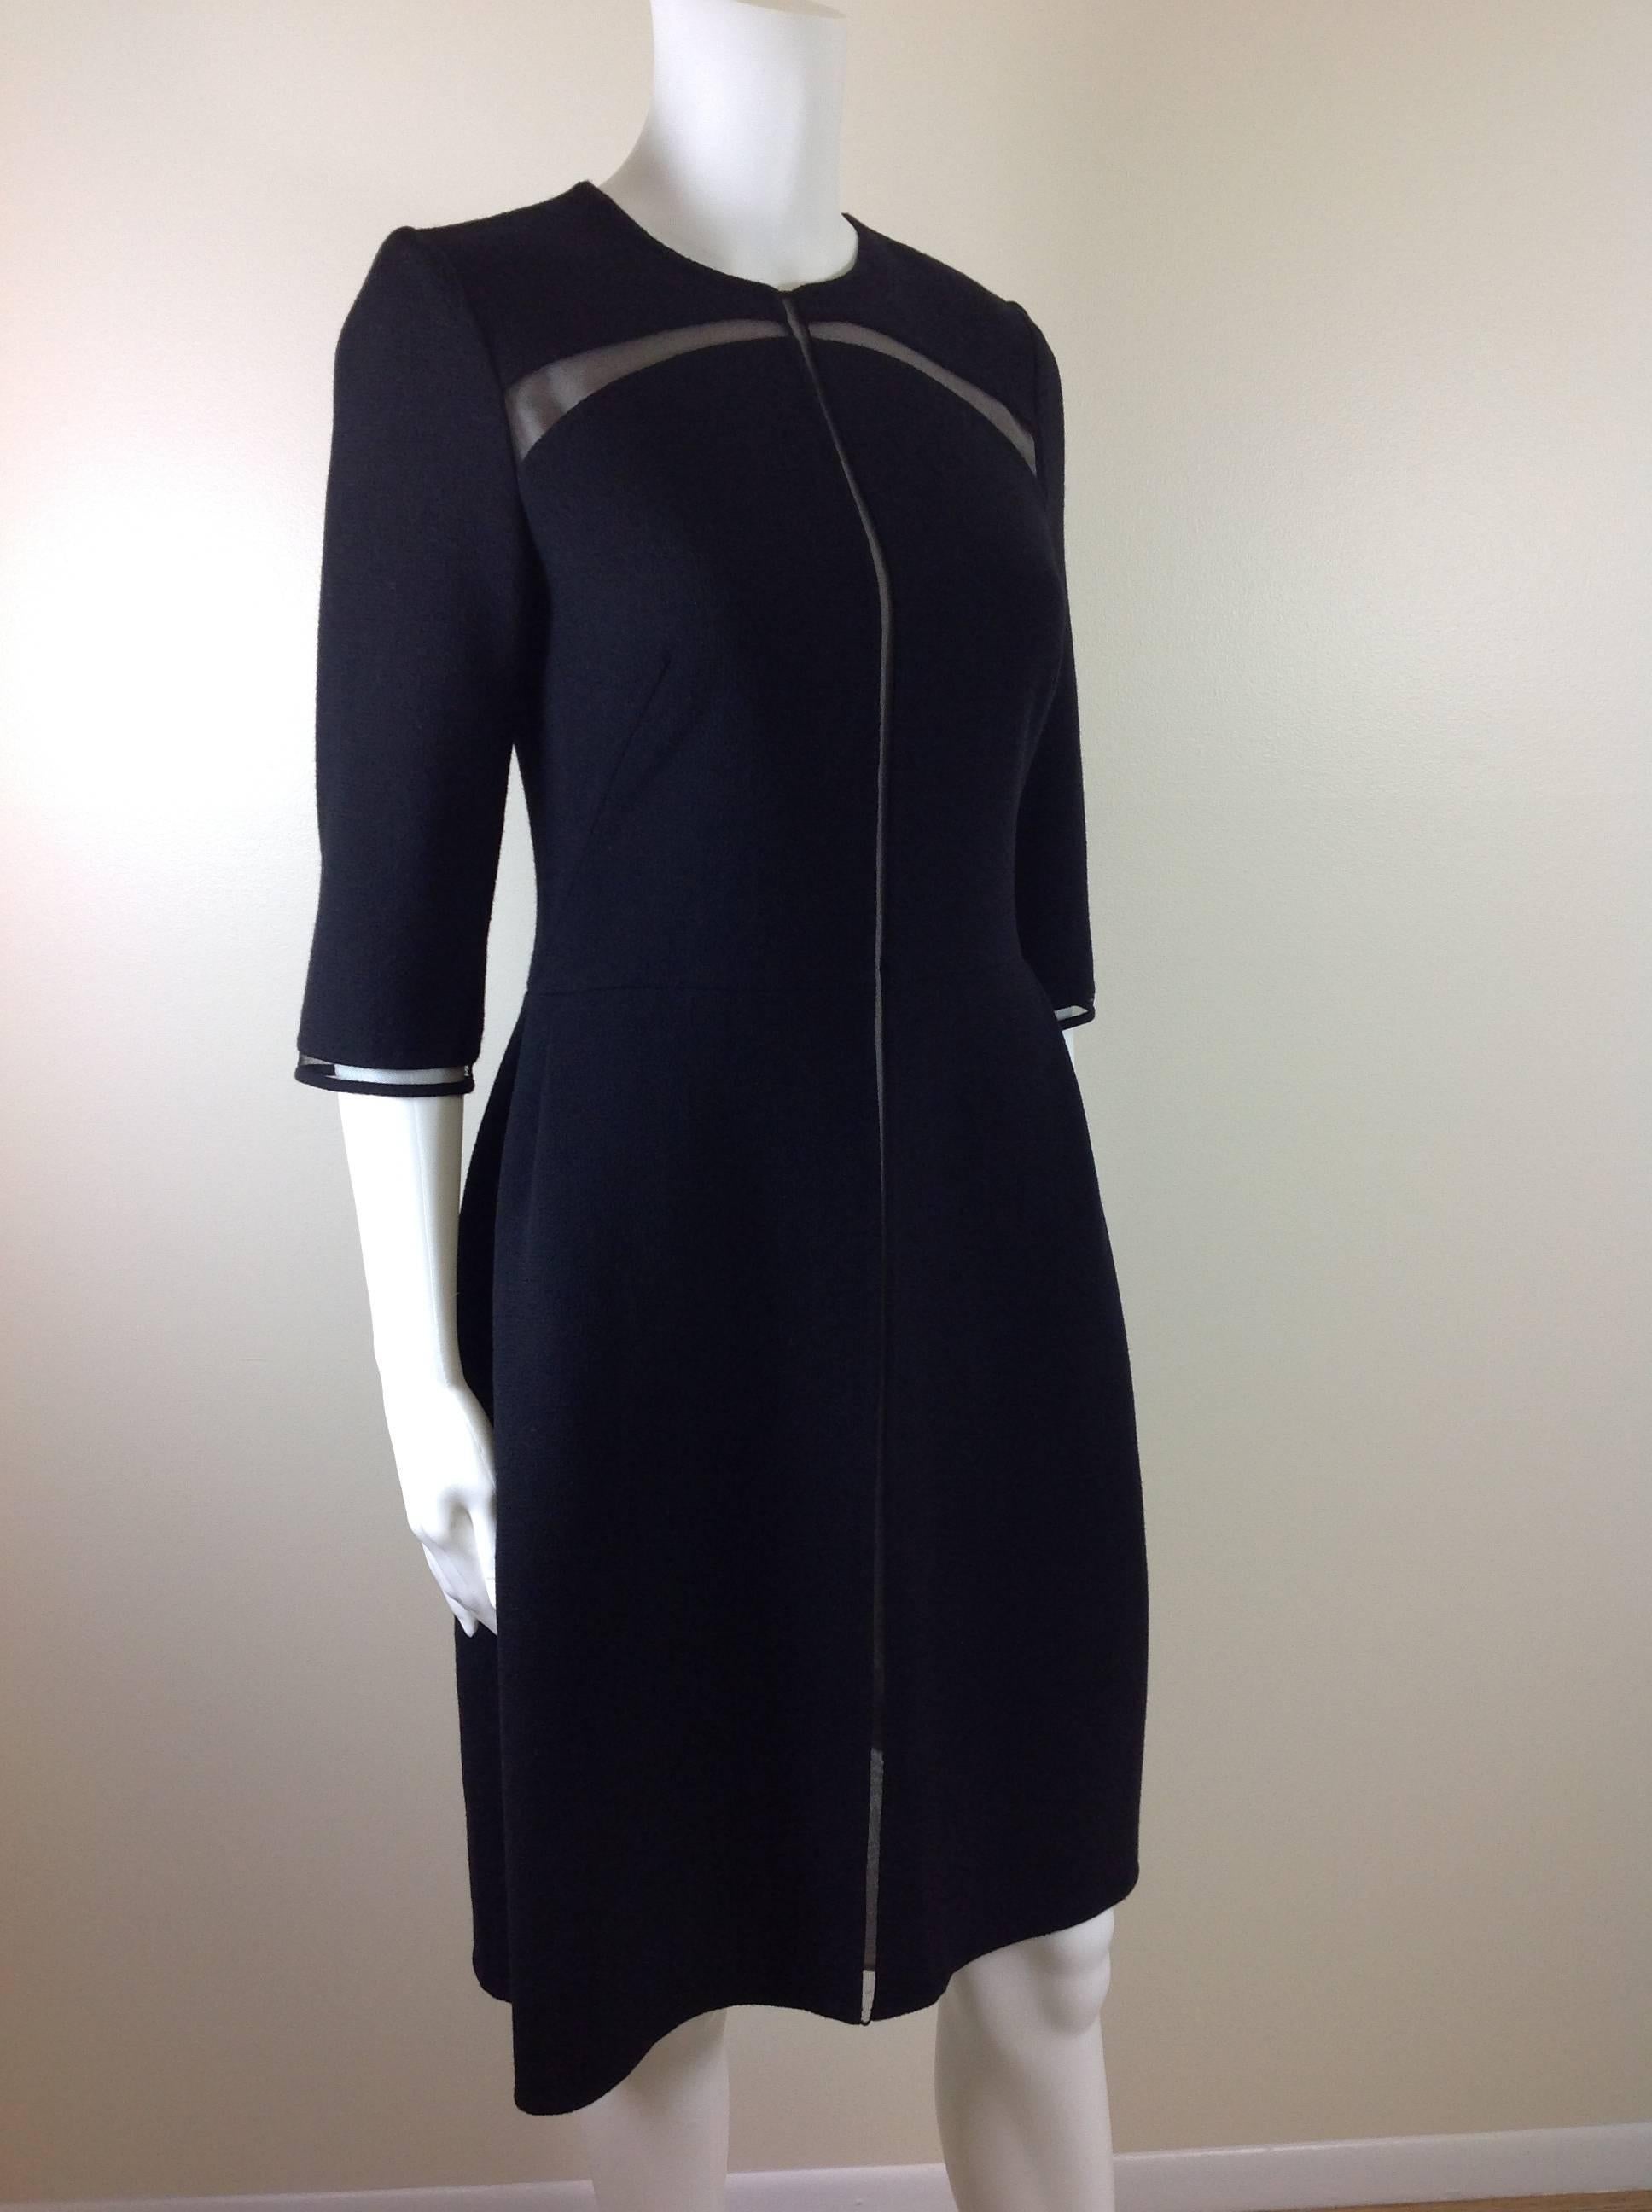 Chado Ralph Rucci beautifully shaped black wool crepe dress.  
